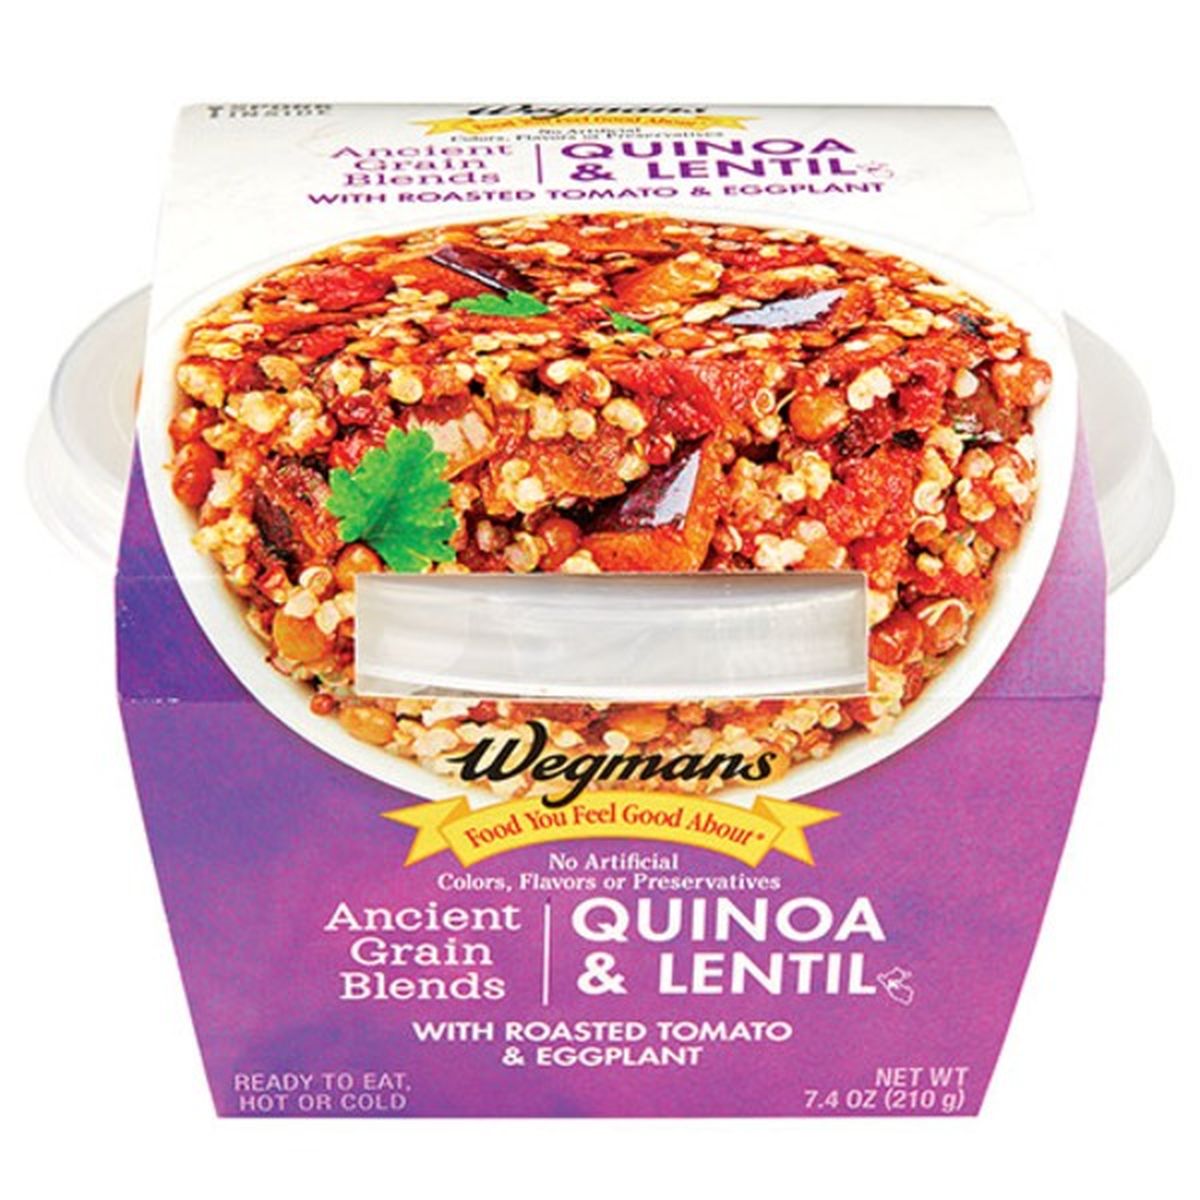 Calories in Wegmans Quinoa & Lentil Ancient Grain with Roasted Tomato & Eggplant